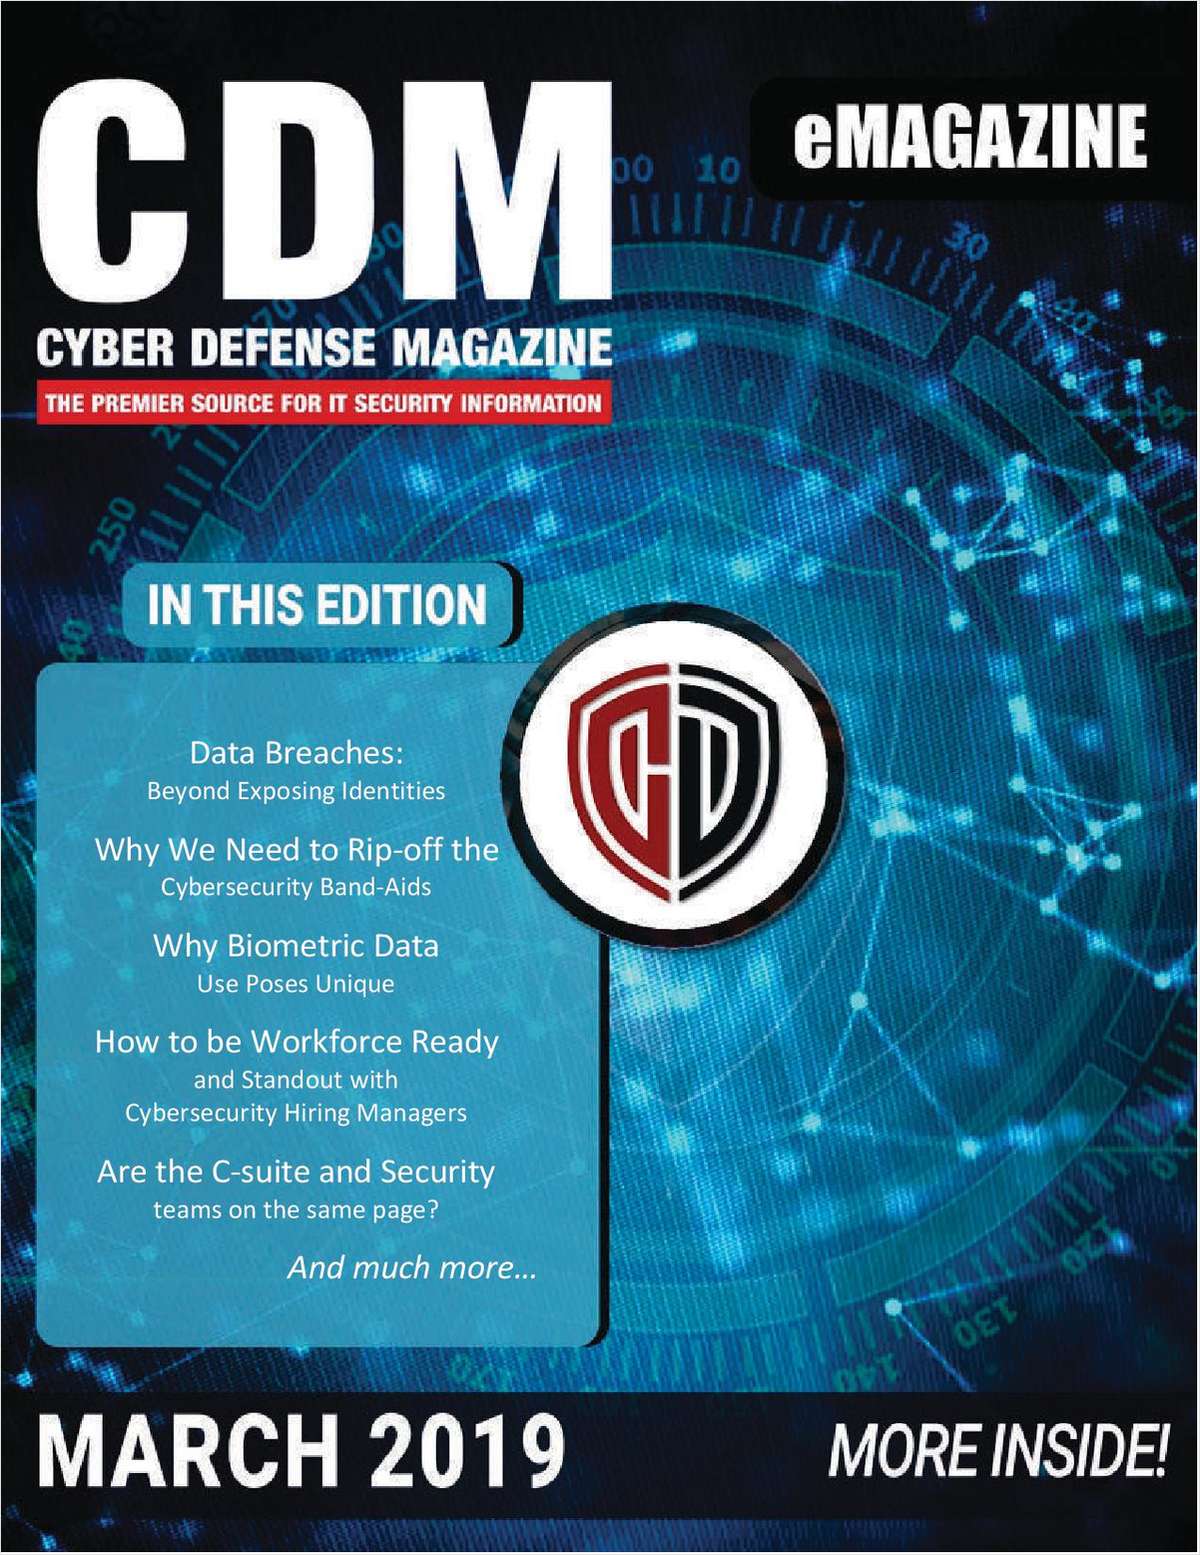 Cyber Defense eMagazine - March 2019 Edition